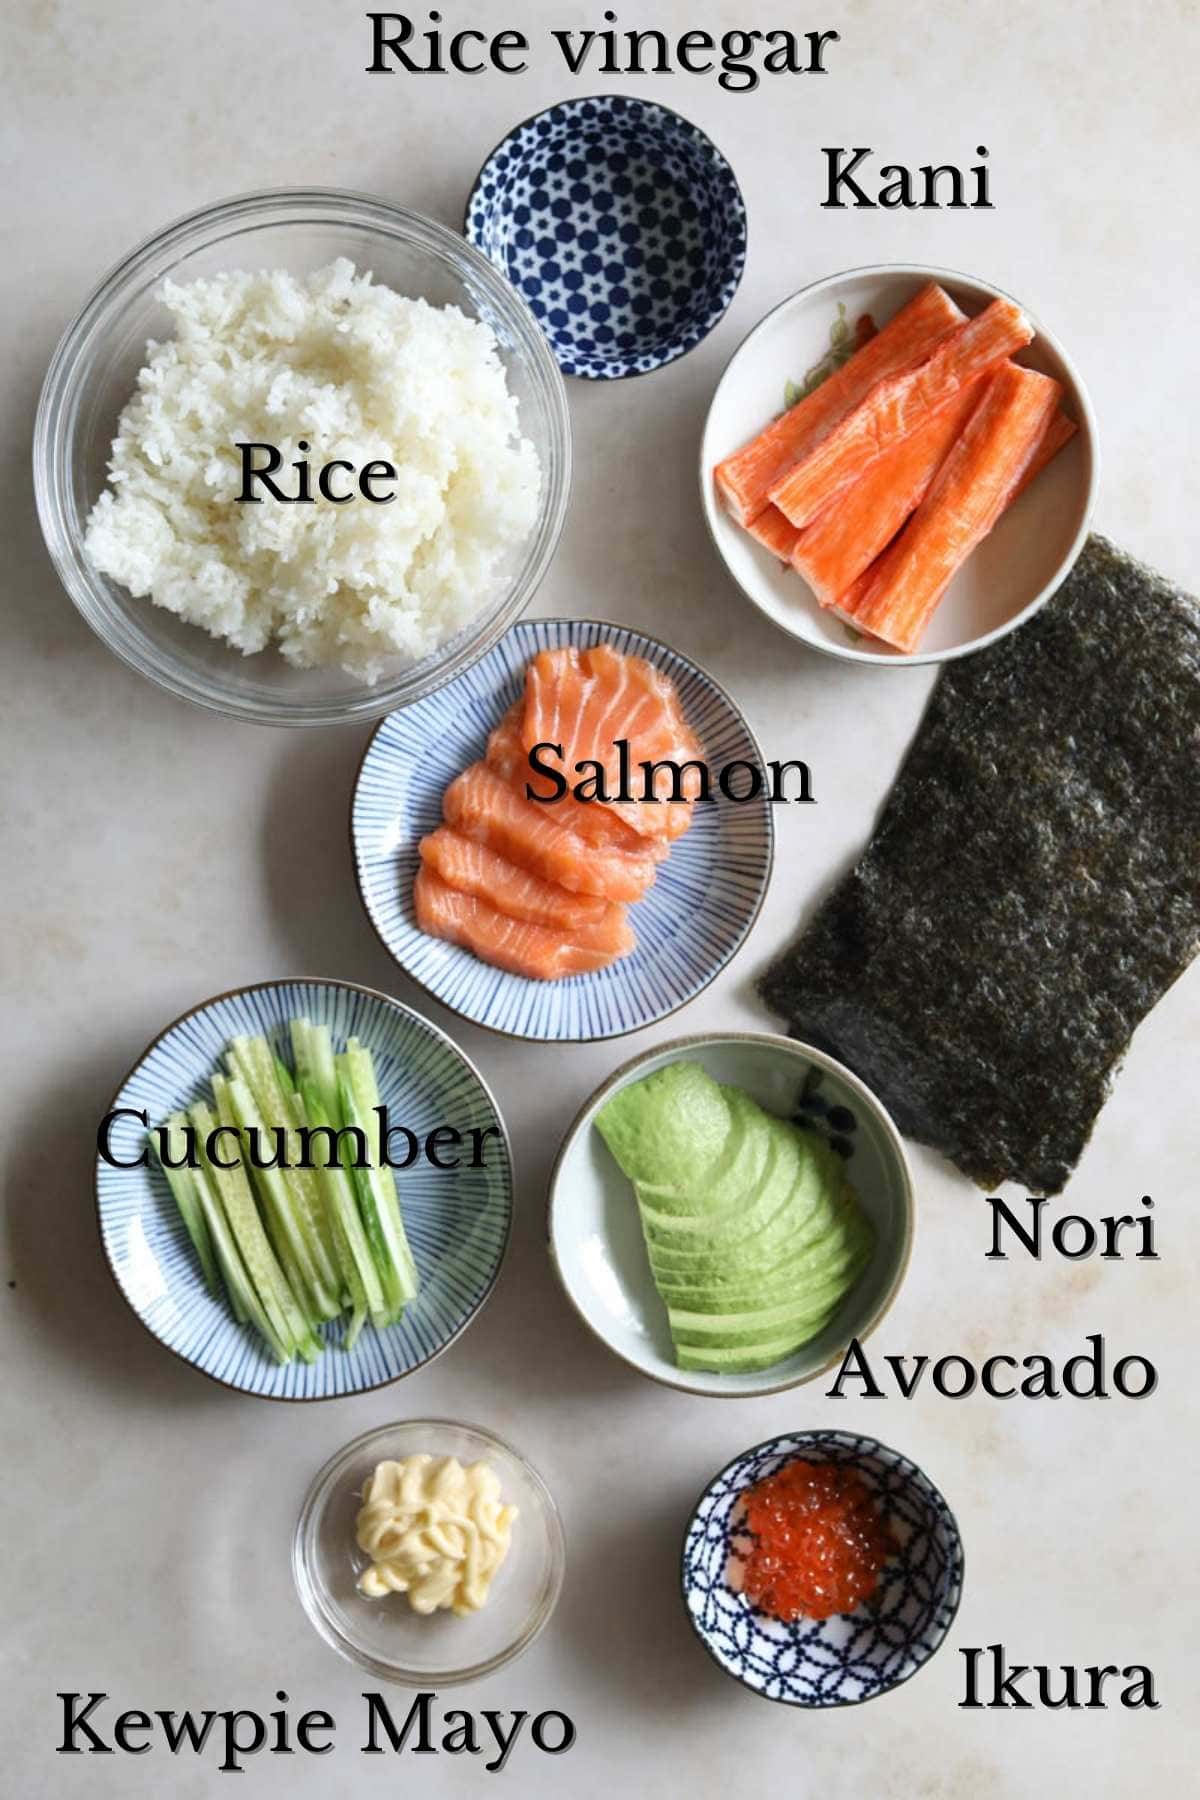 Ingredients to make an Alaska sushi roll with salmon and Ikura.